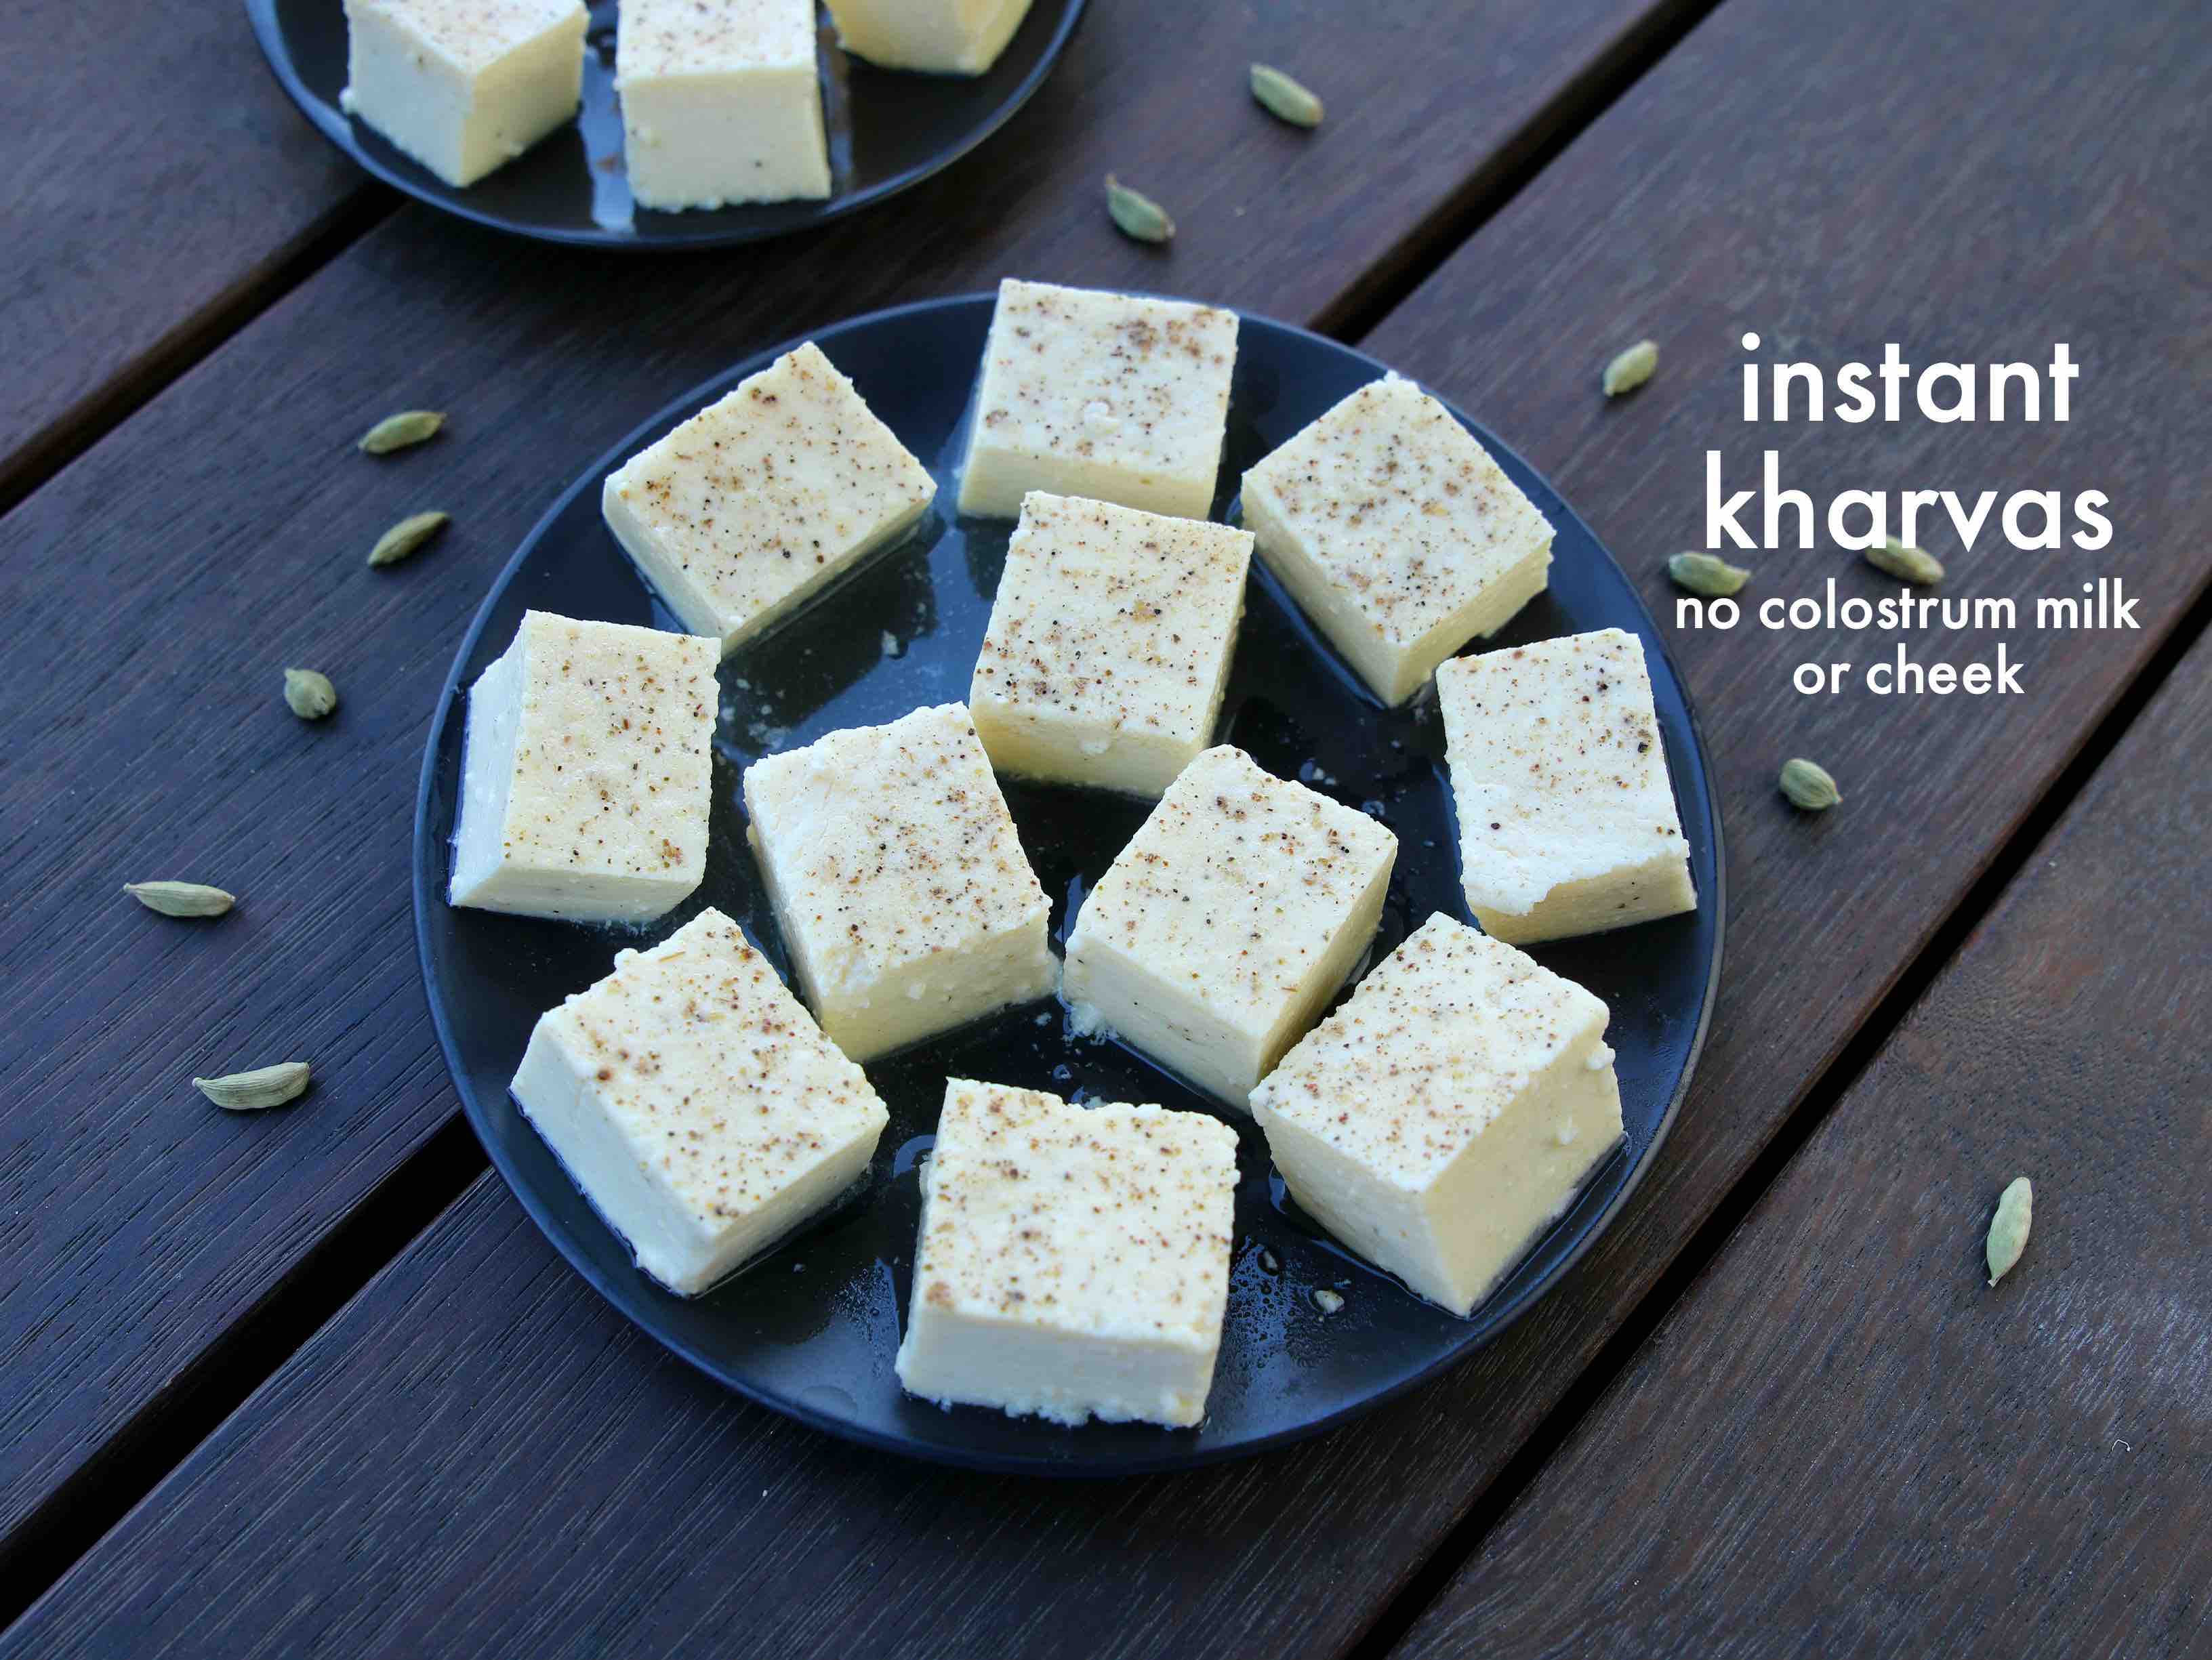 kharvas recipe | junnu recipe | how to make instant kharvas